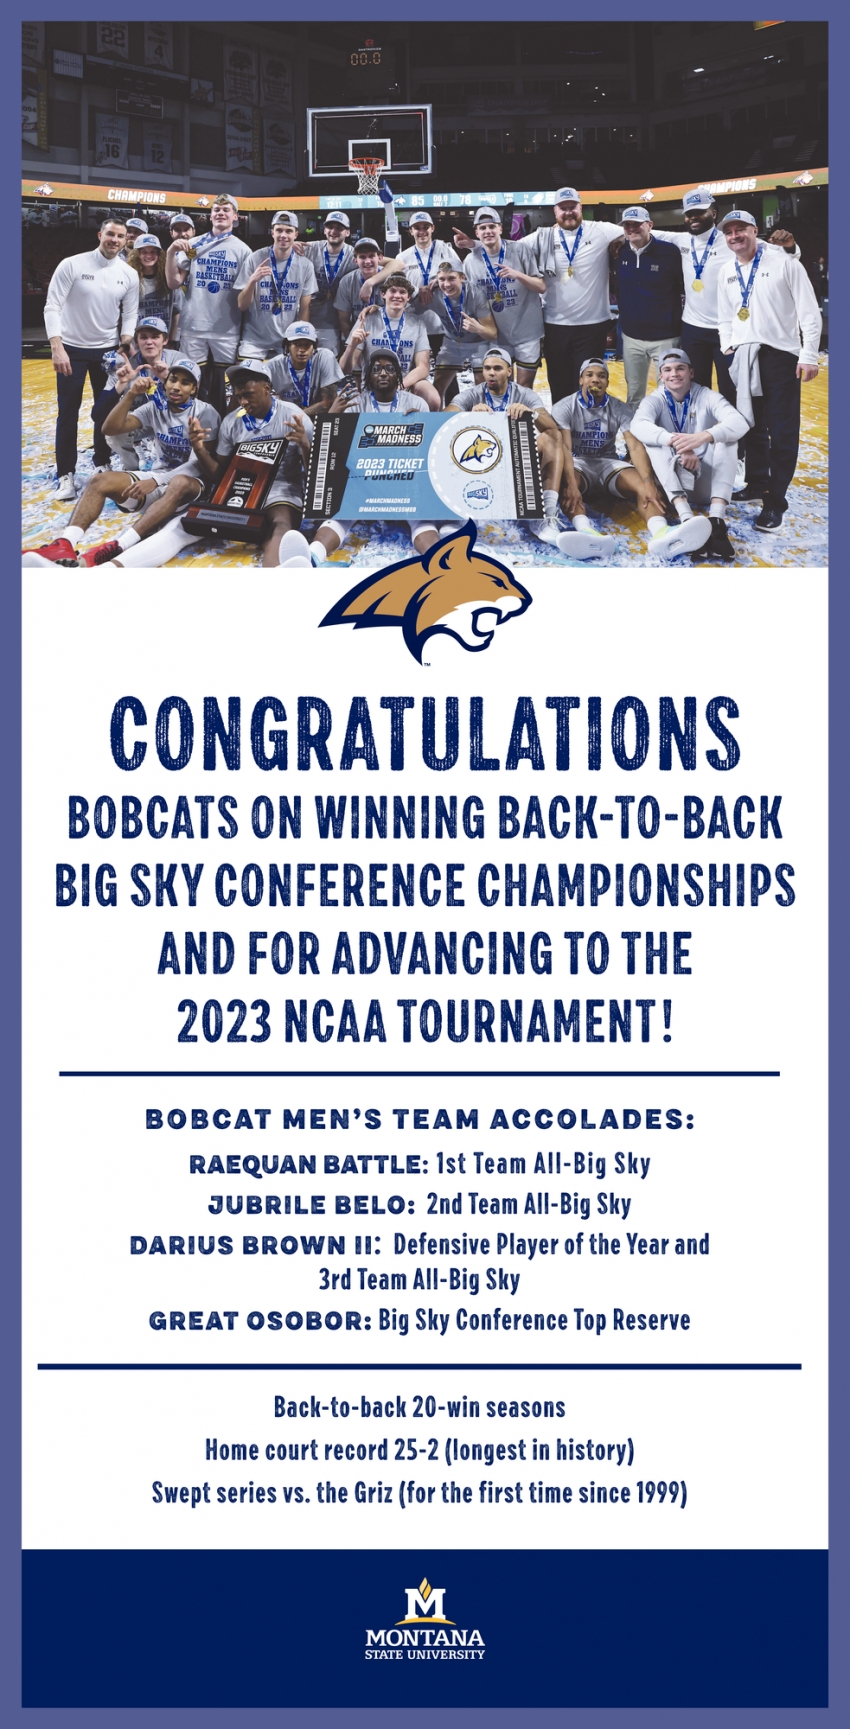 Congratulations to the Montana State Bobcat Women's Basketball Team